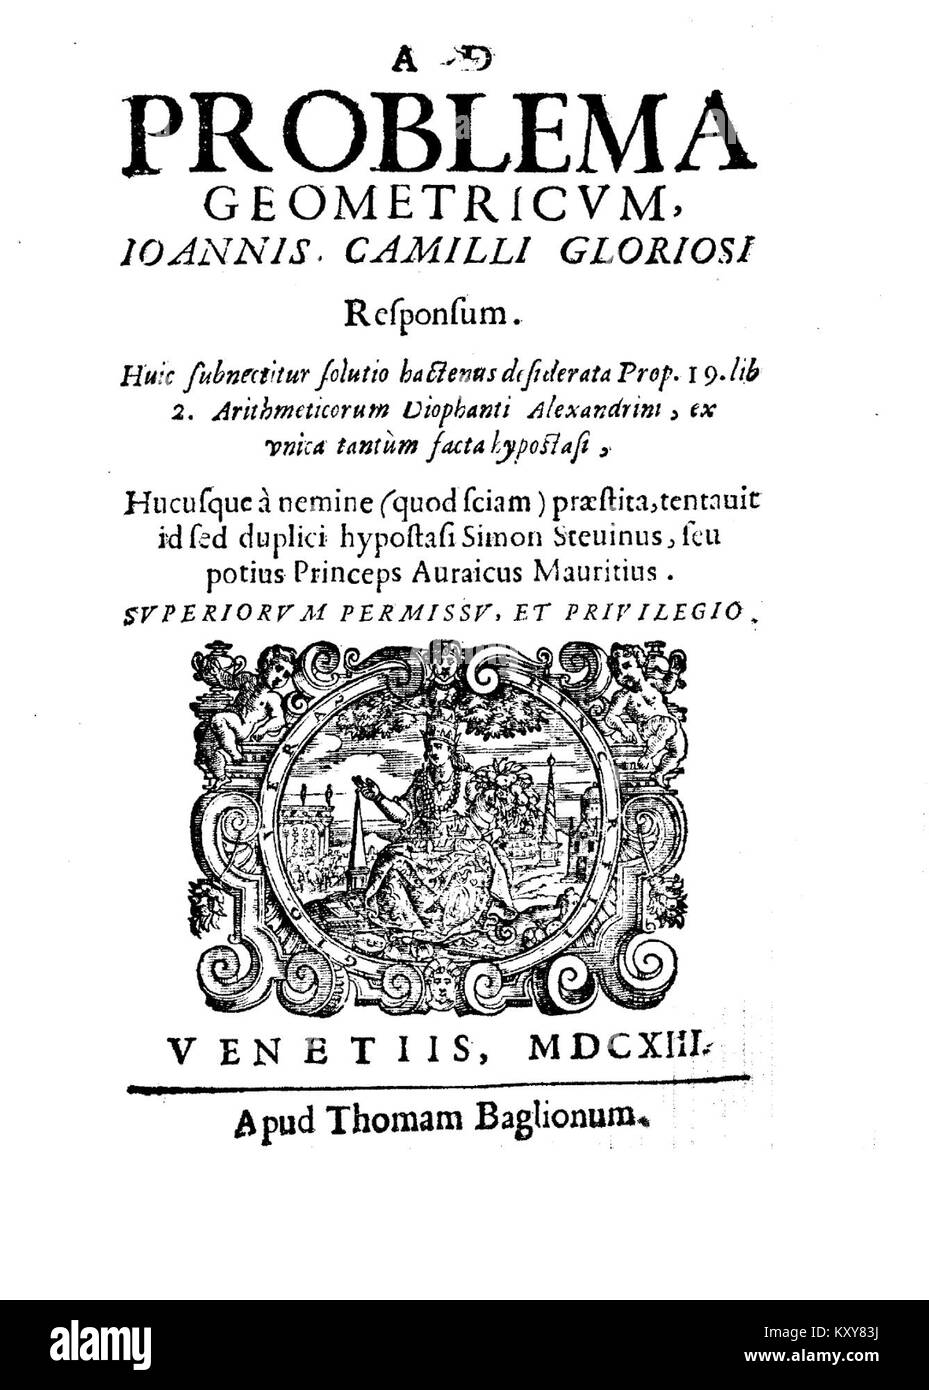 Glorioso, Giovanni Camillo – Ad problema geometricum responsum, 1613 – BEIC 211739 Stock Photo